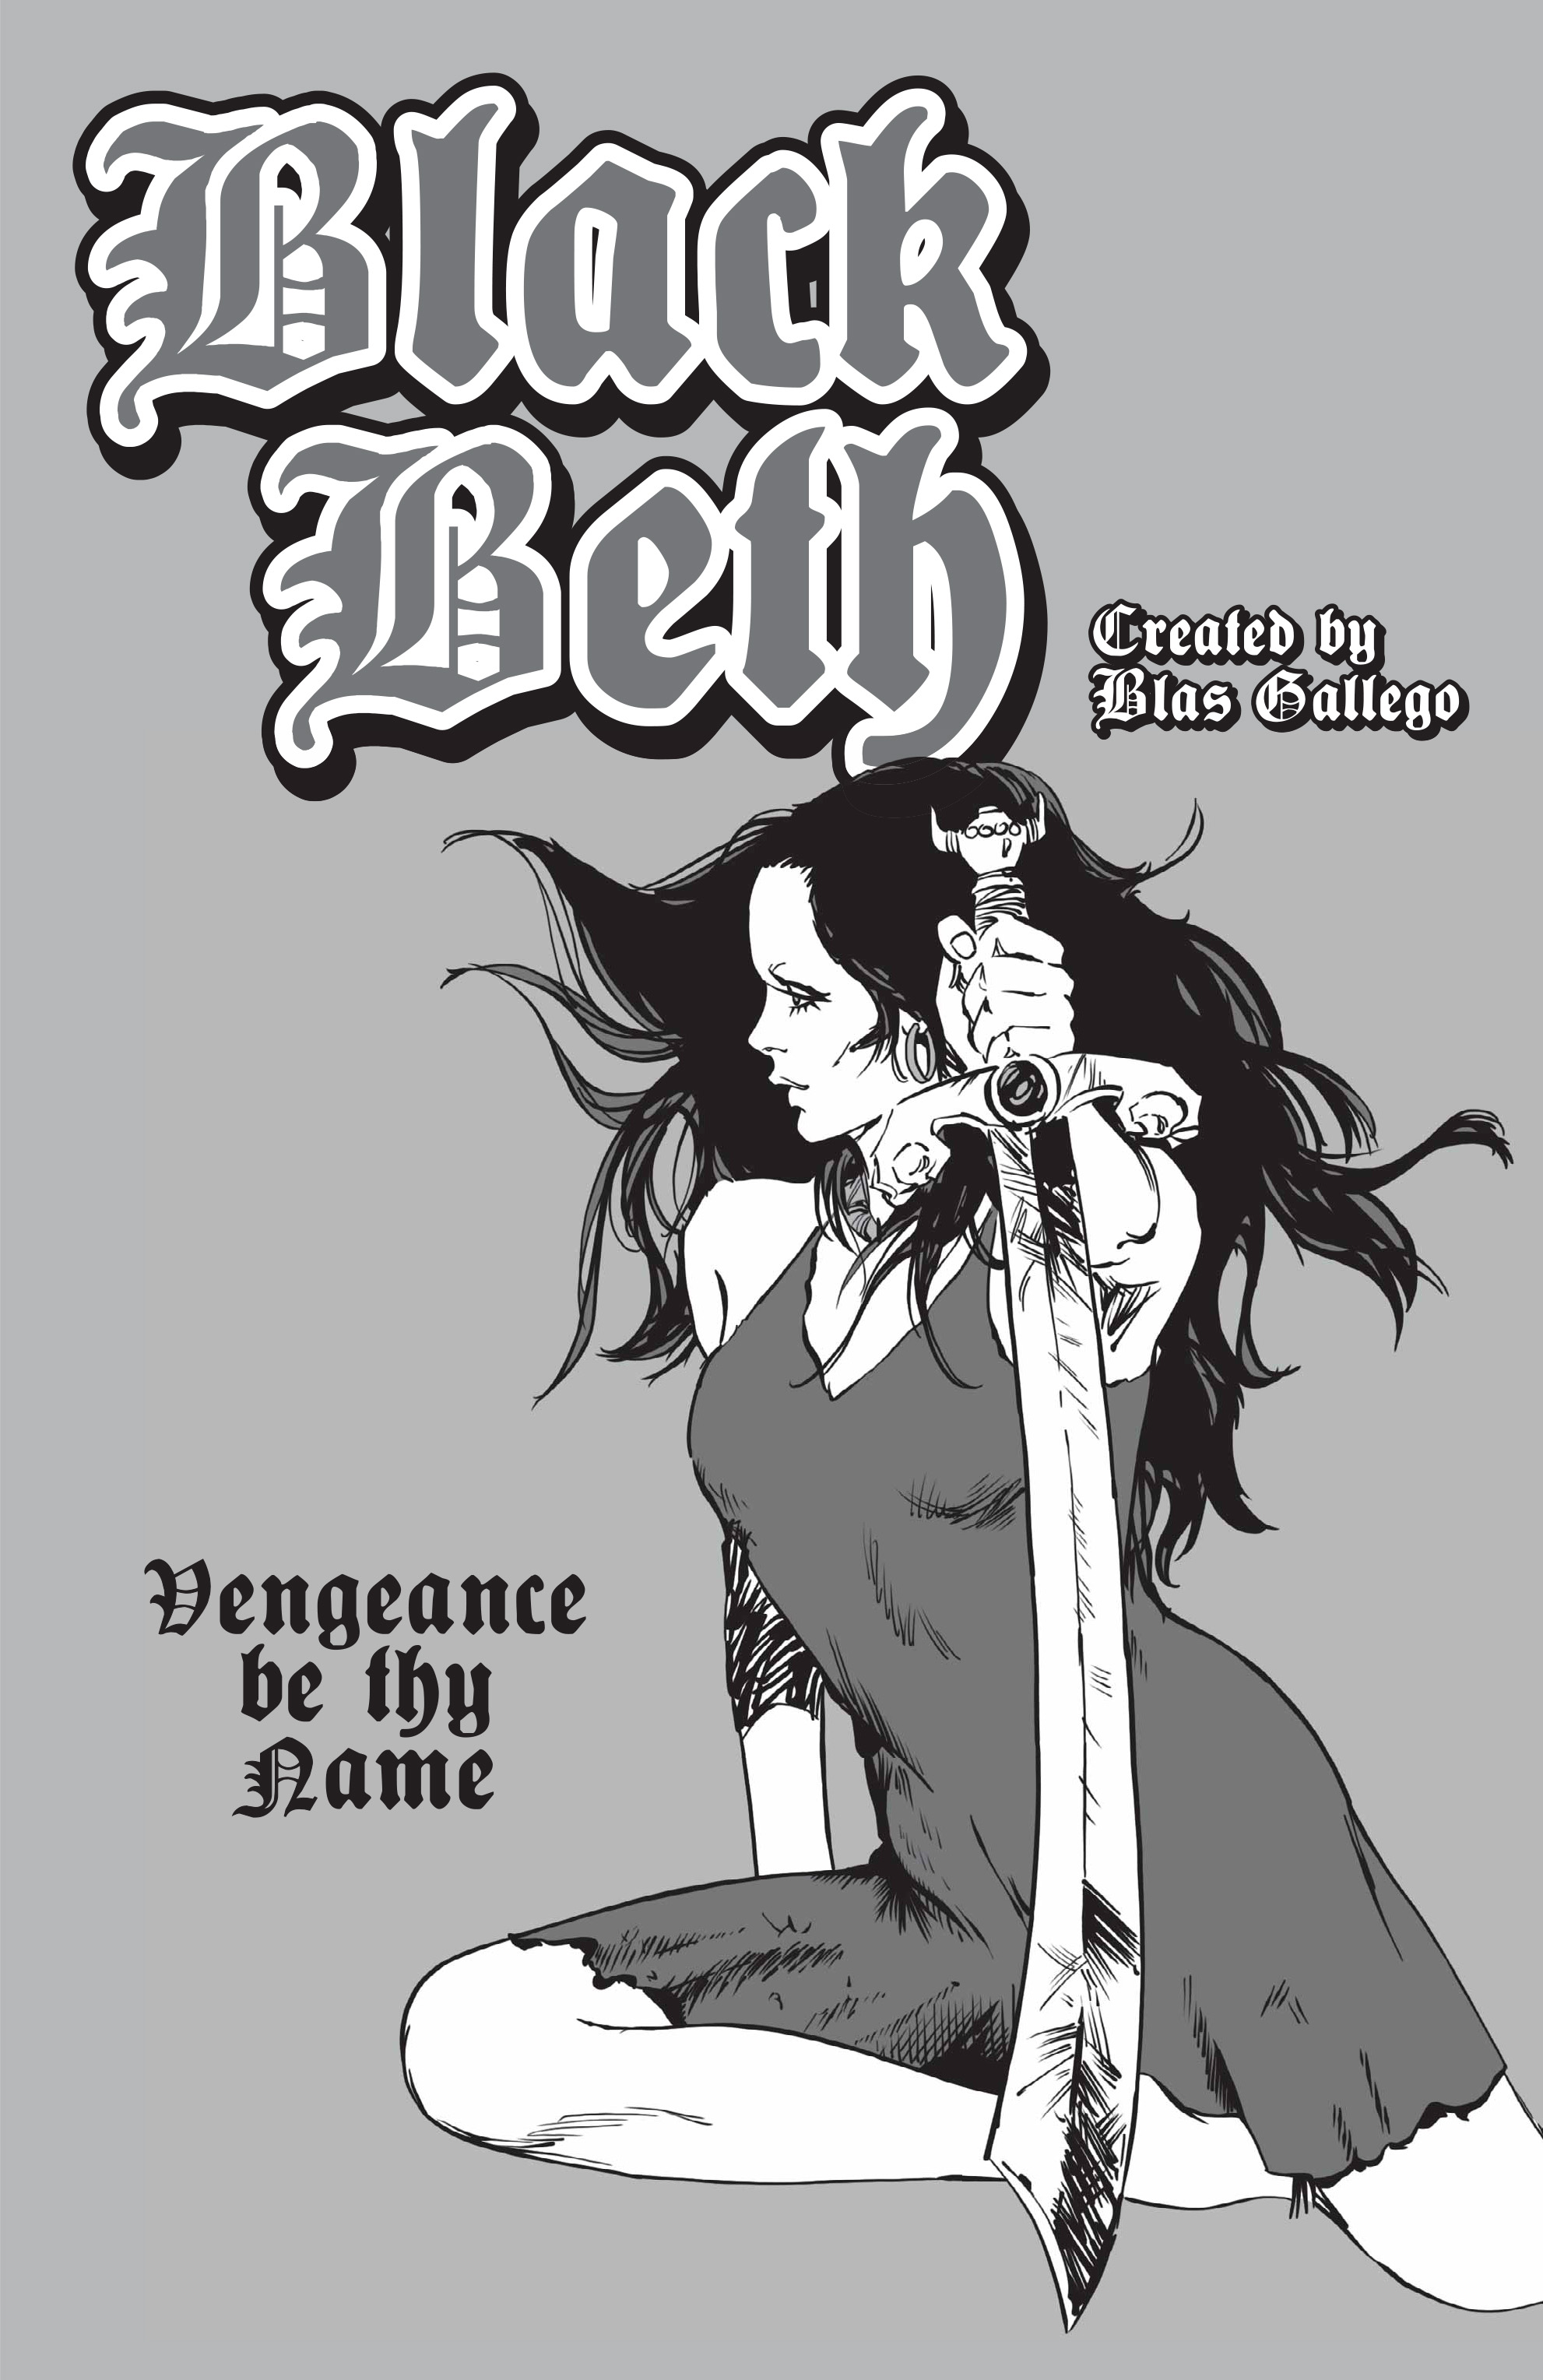 Read online Black Beth: Vengeance be thy name comic -  Issue # TPB - 3